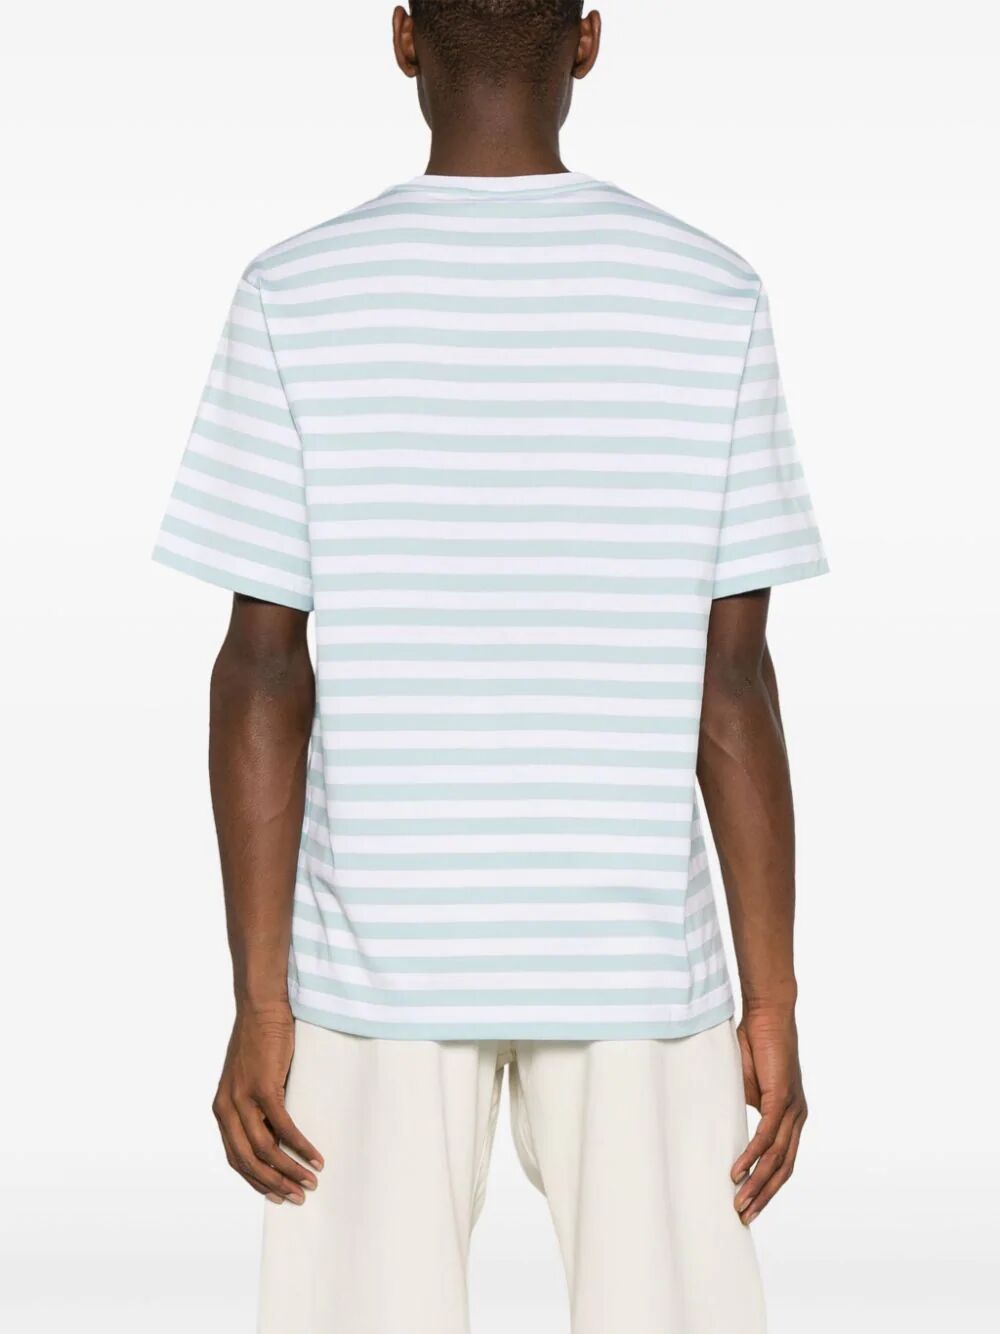 T-shirt Striped Jersey Fabric + Embroidered Versace Nautical Emblem